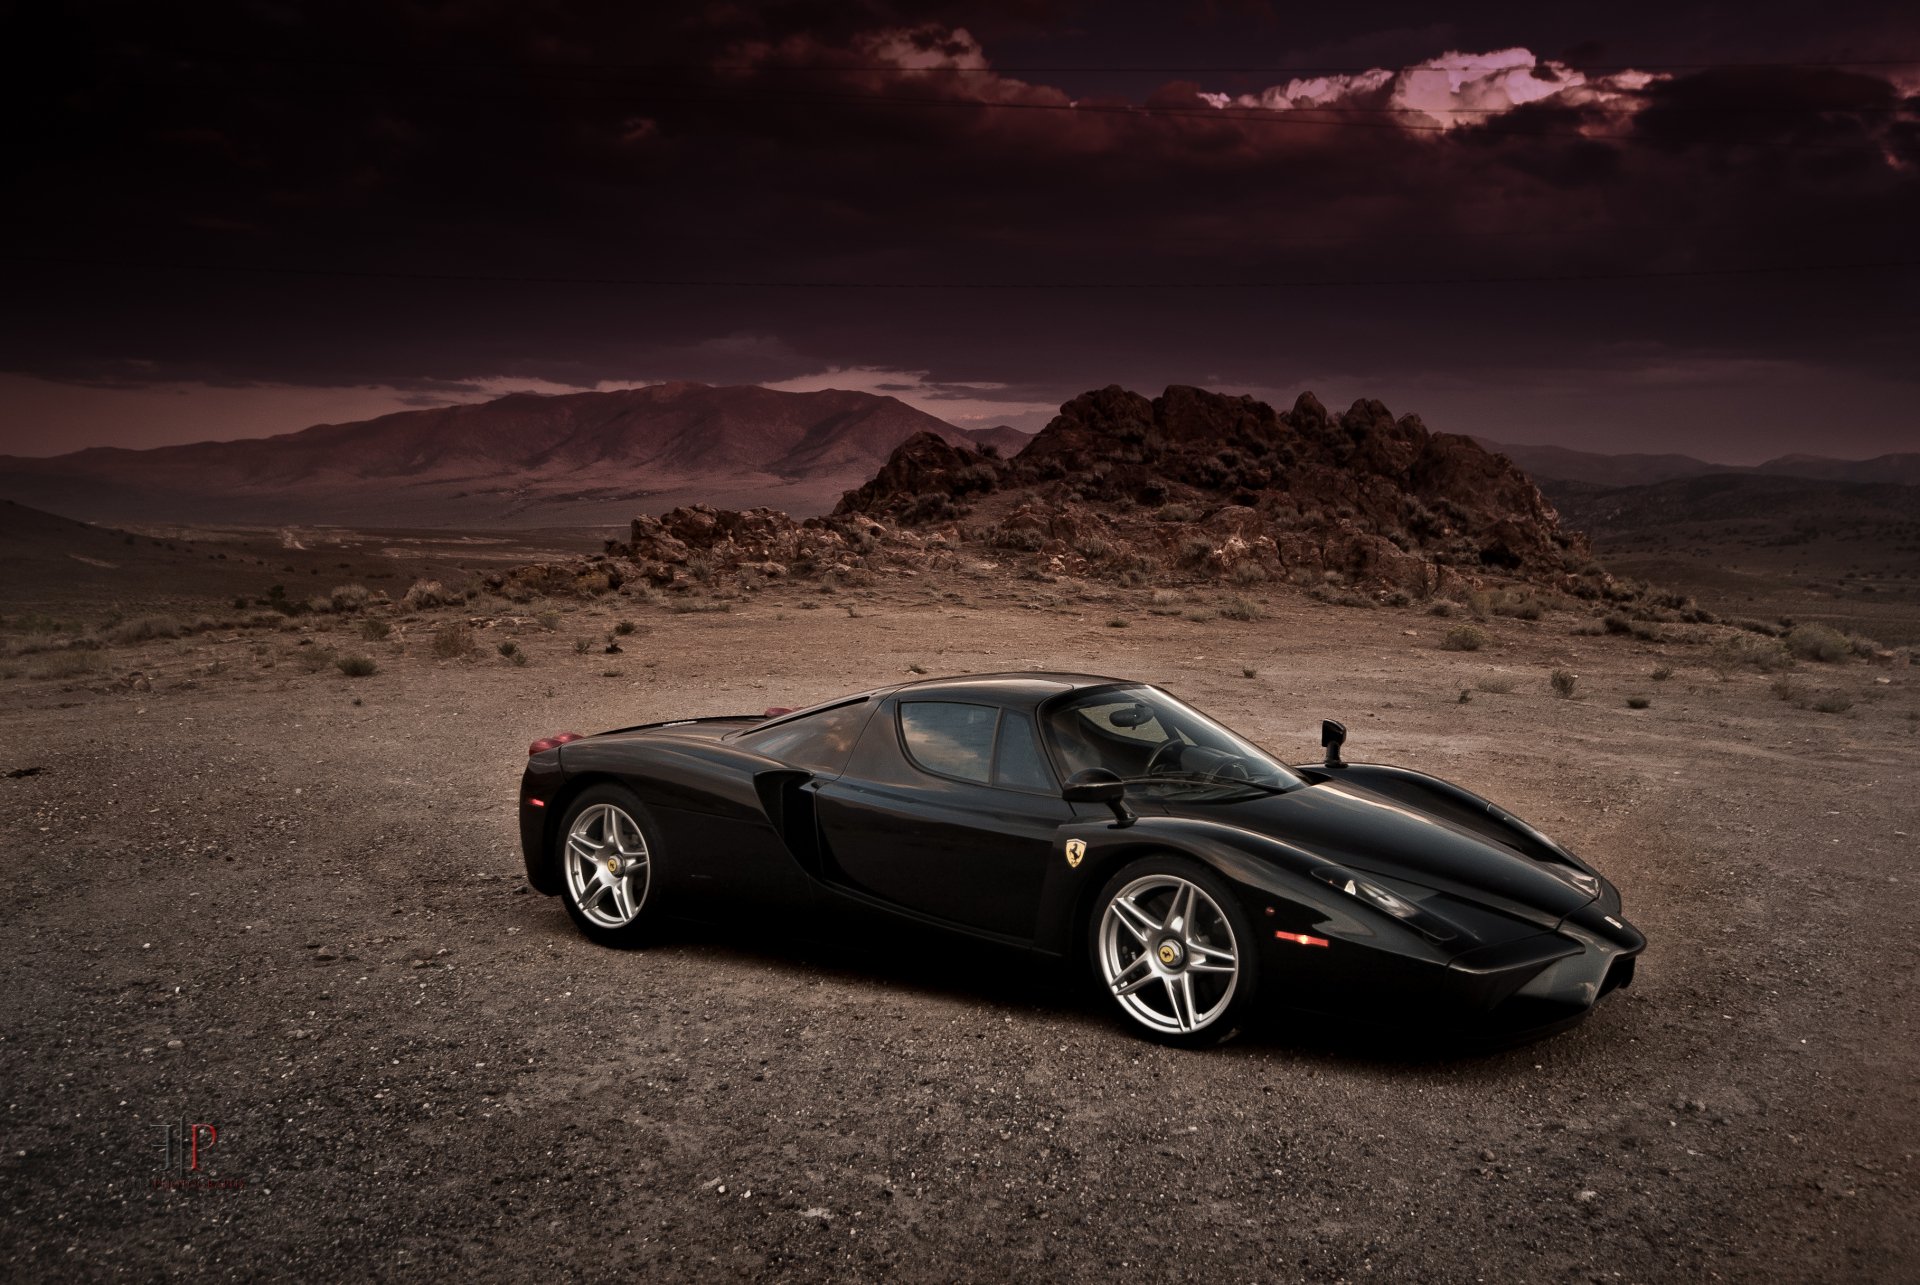 Ferrari-Enzo-HD-Wallpaper-|-Background-Image-|-3636x2434-...